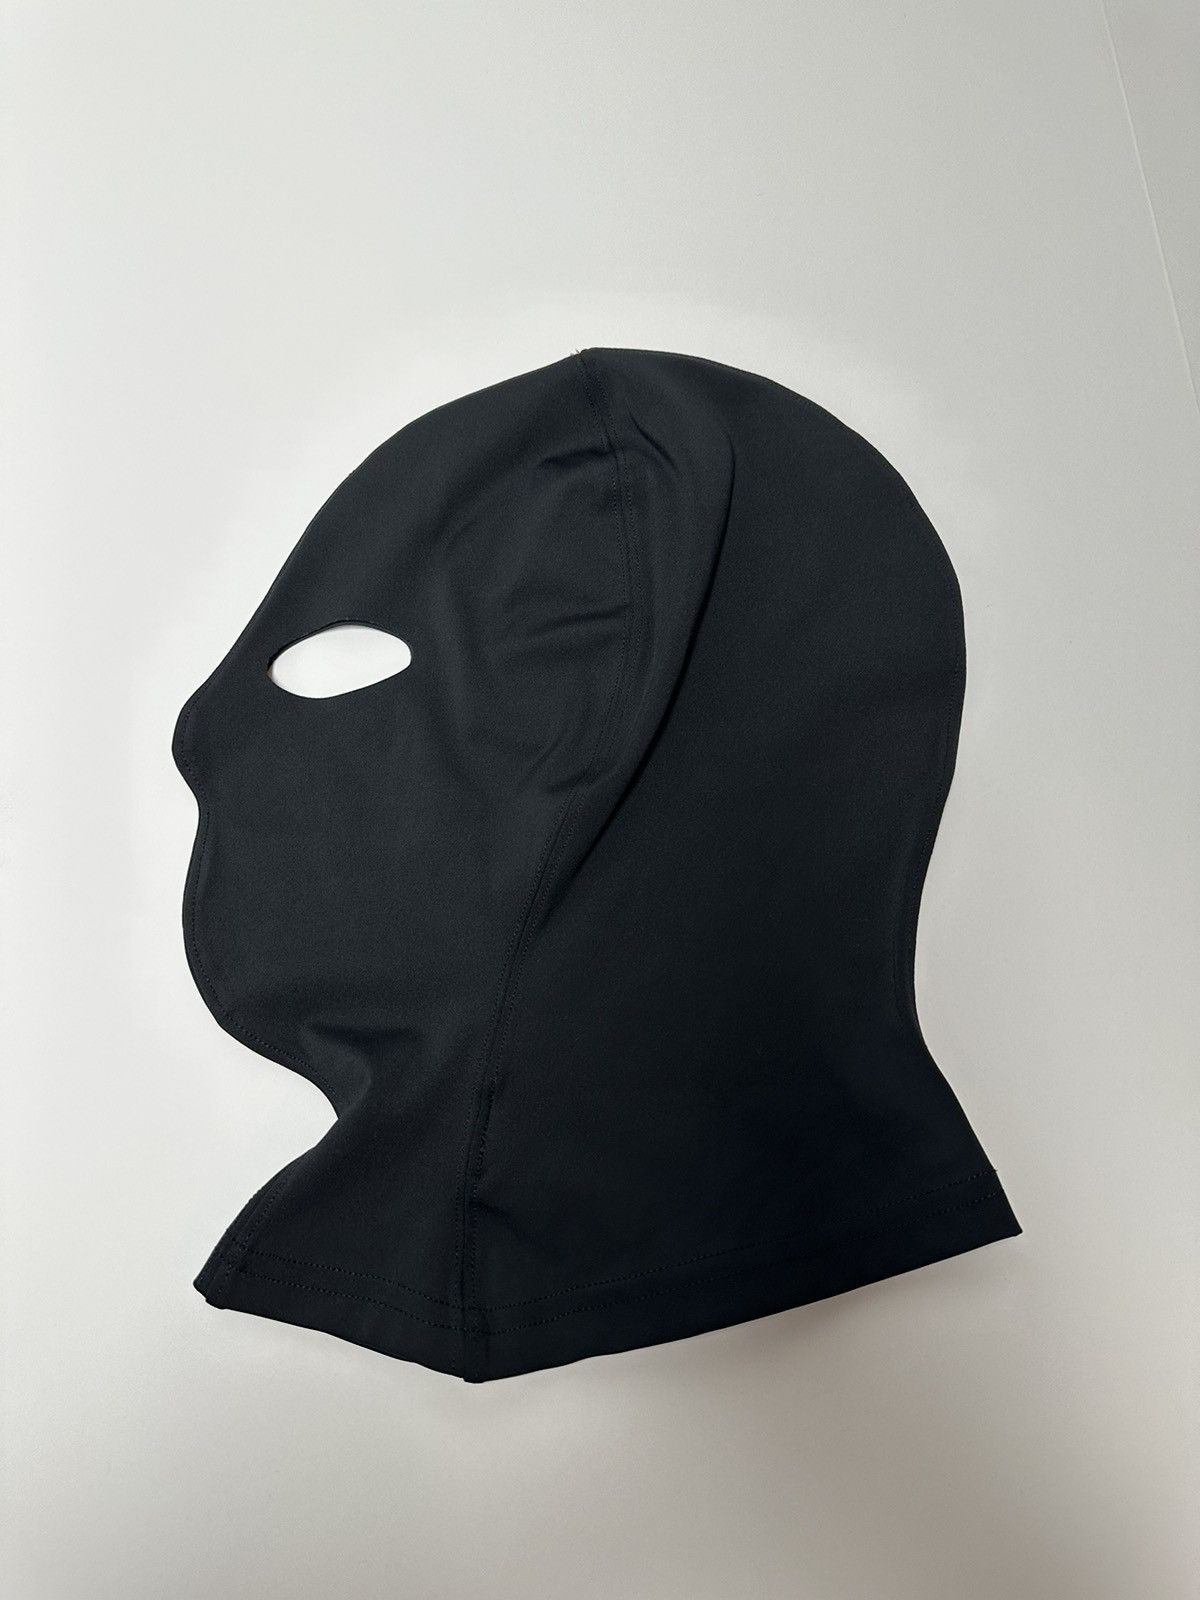 Gap Yeezy Gap Mask | Grailed